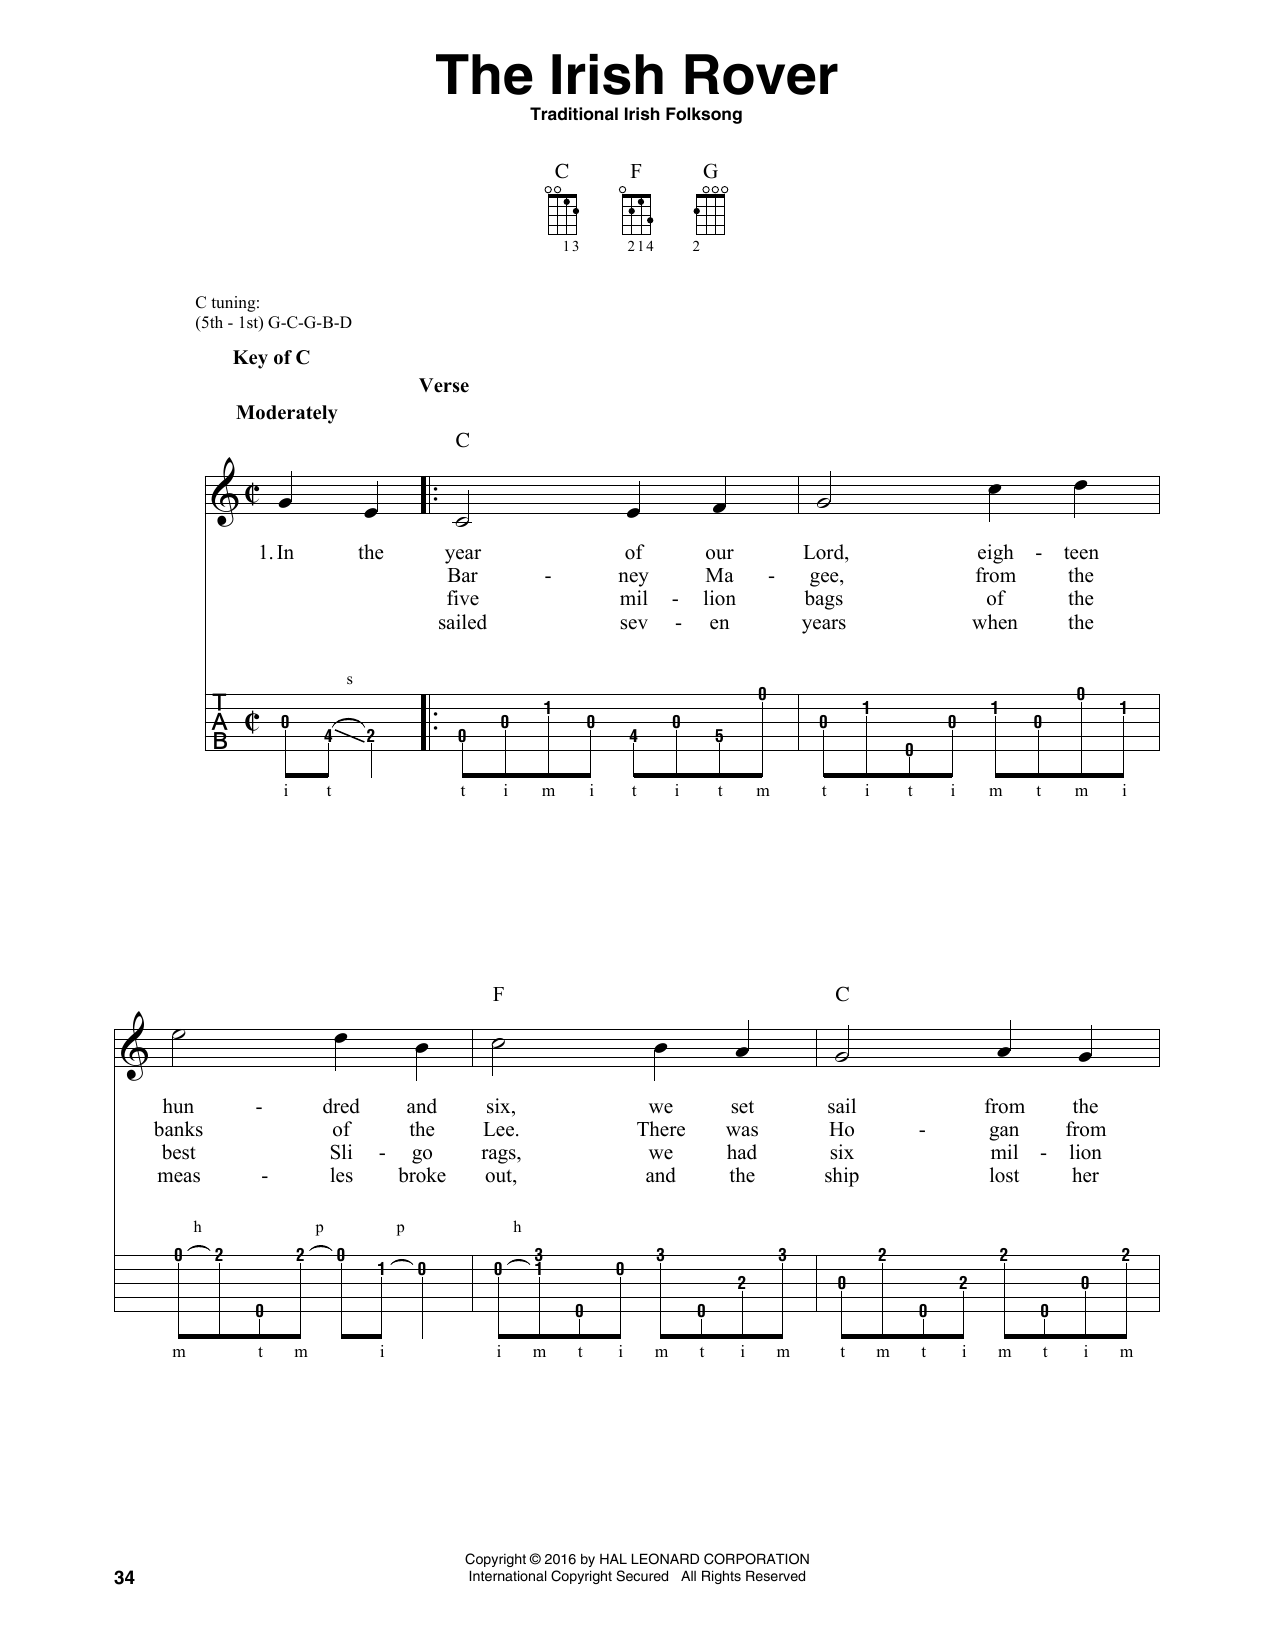 Traditional Irish Folk Song The Irish Rover sheet music notes and chords arranged for Ukulele